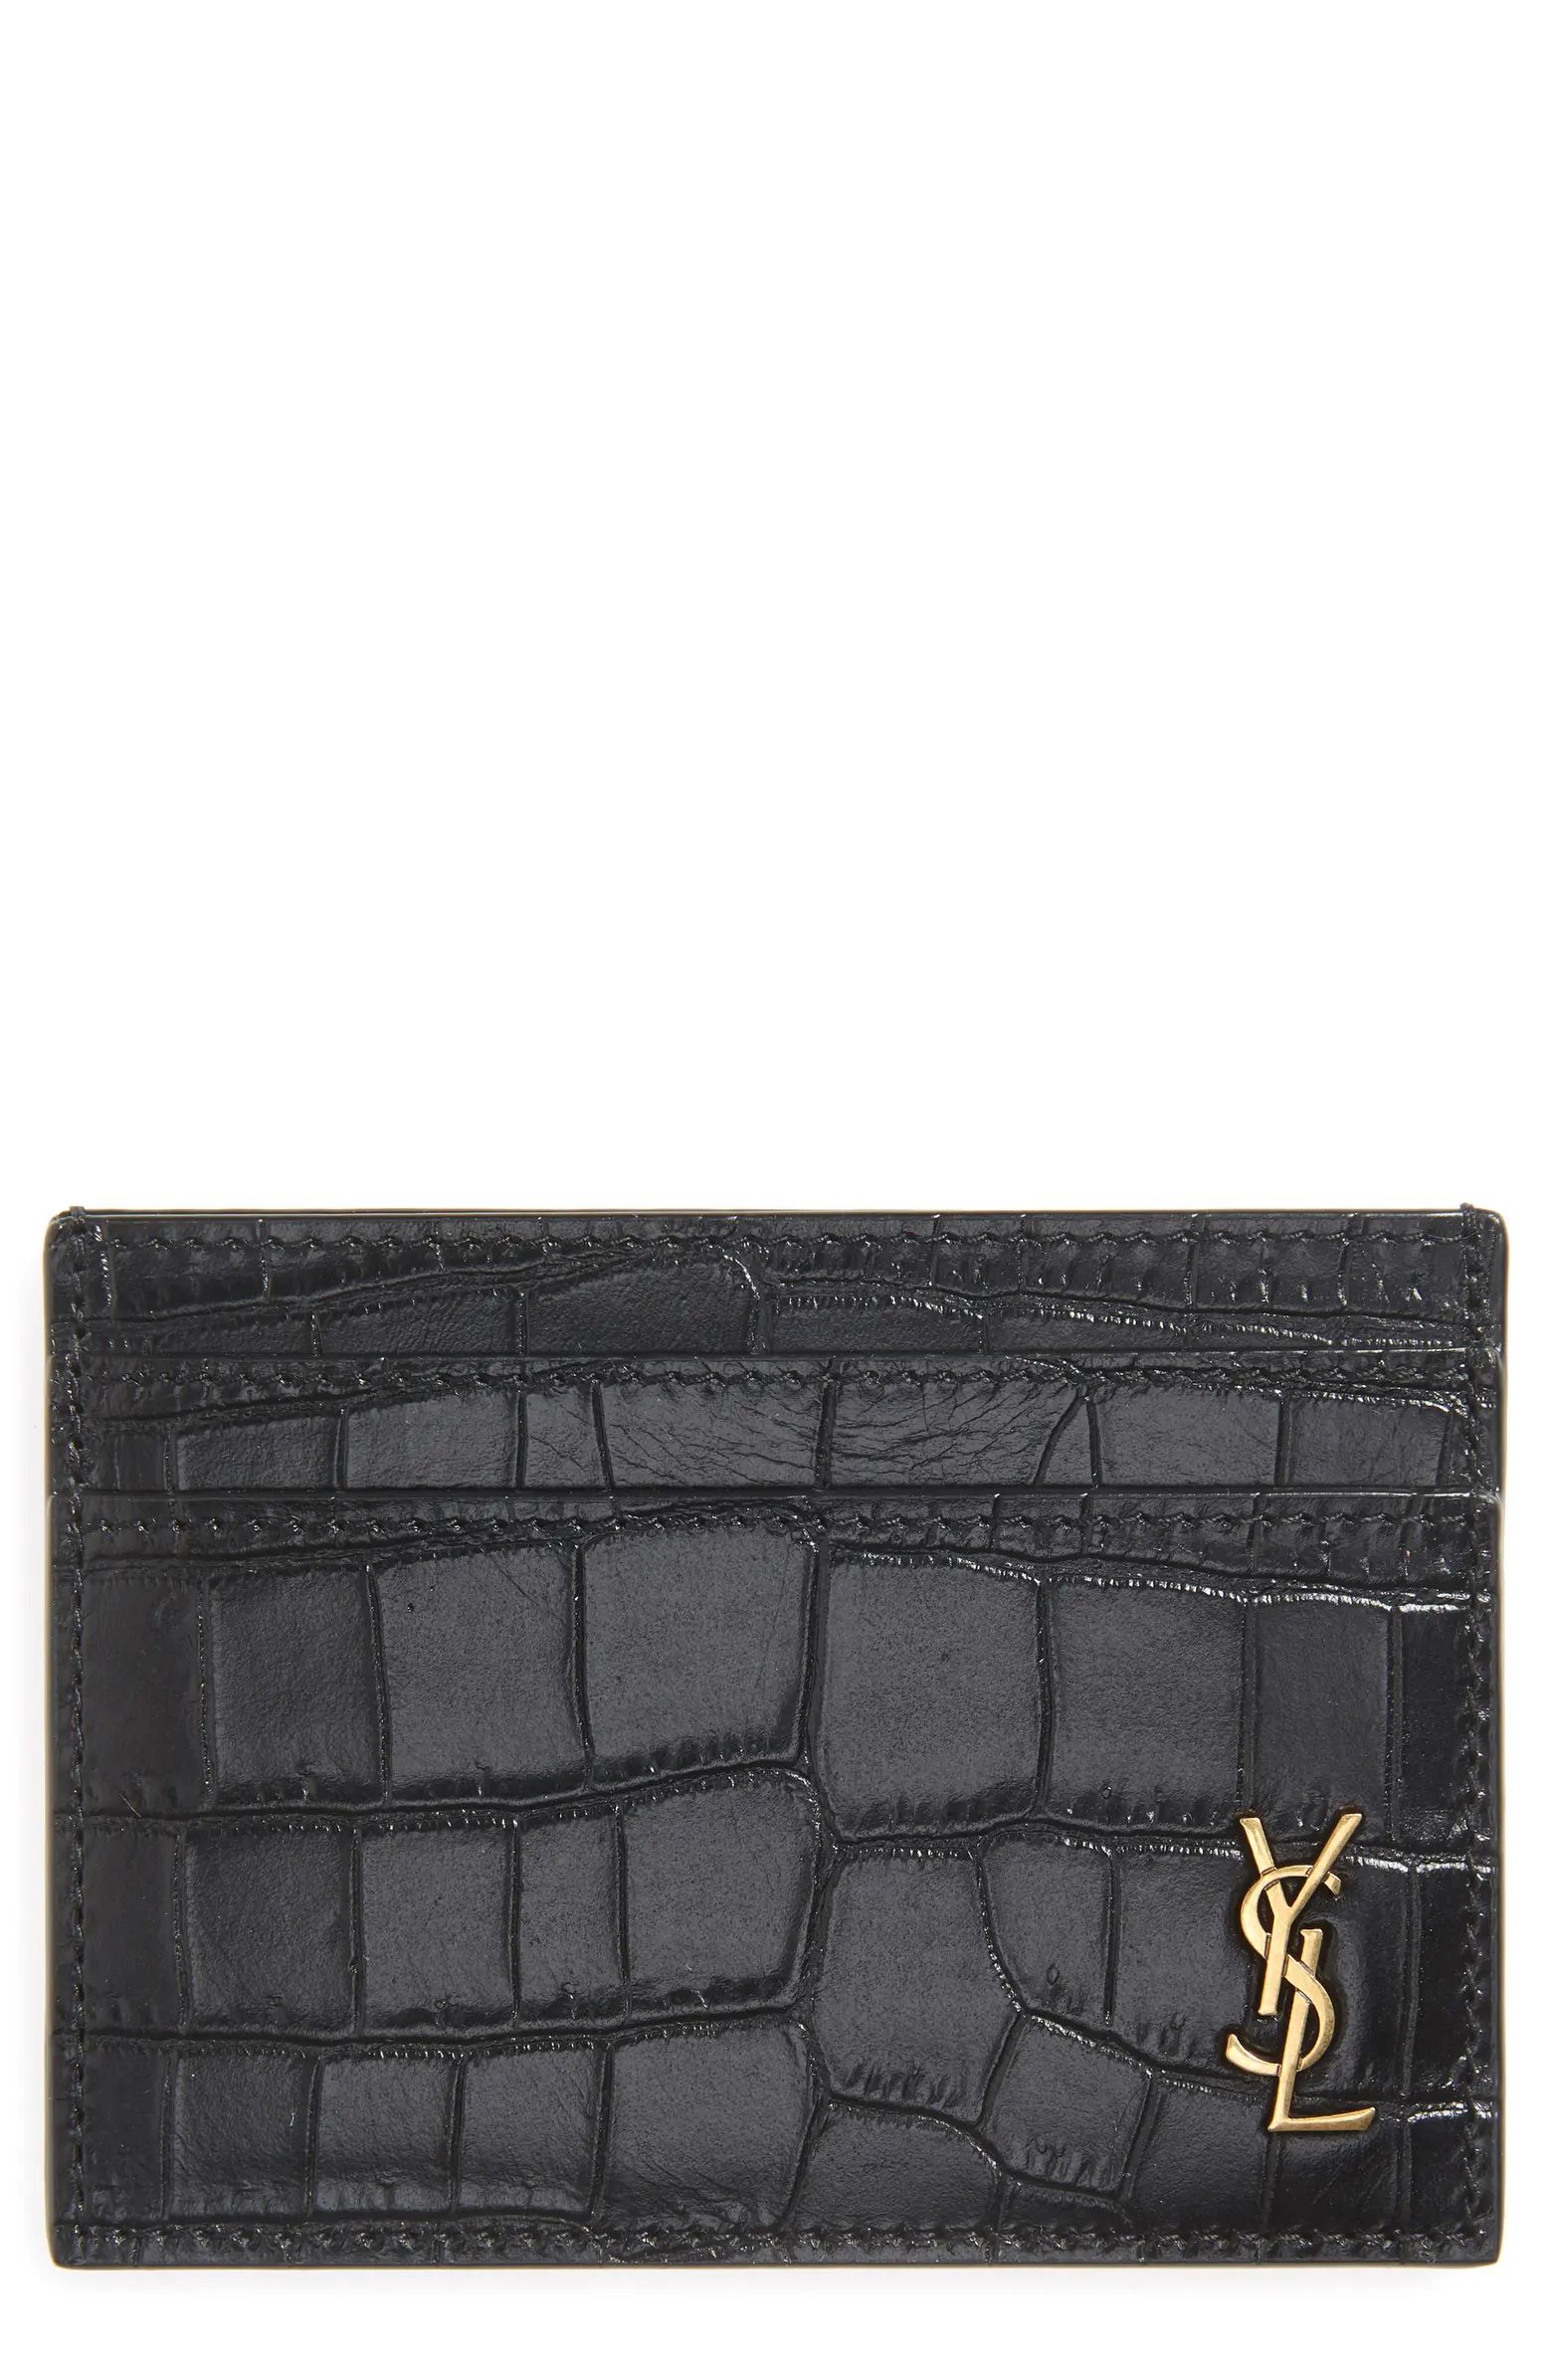 YSL Monogram Croc Embossed Leather Card Case | Nordstrom